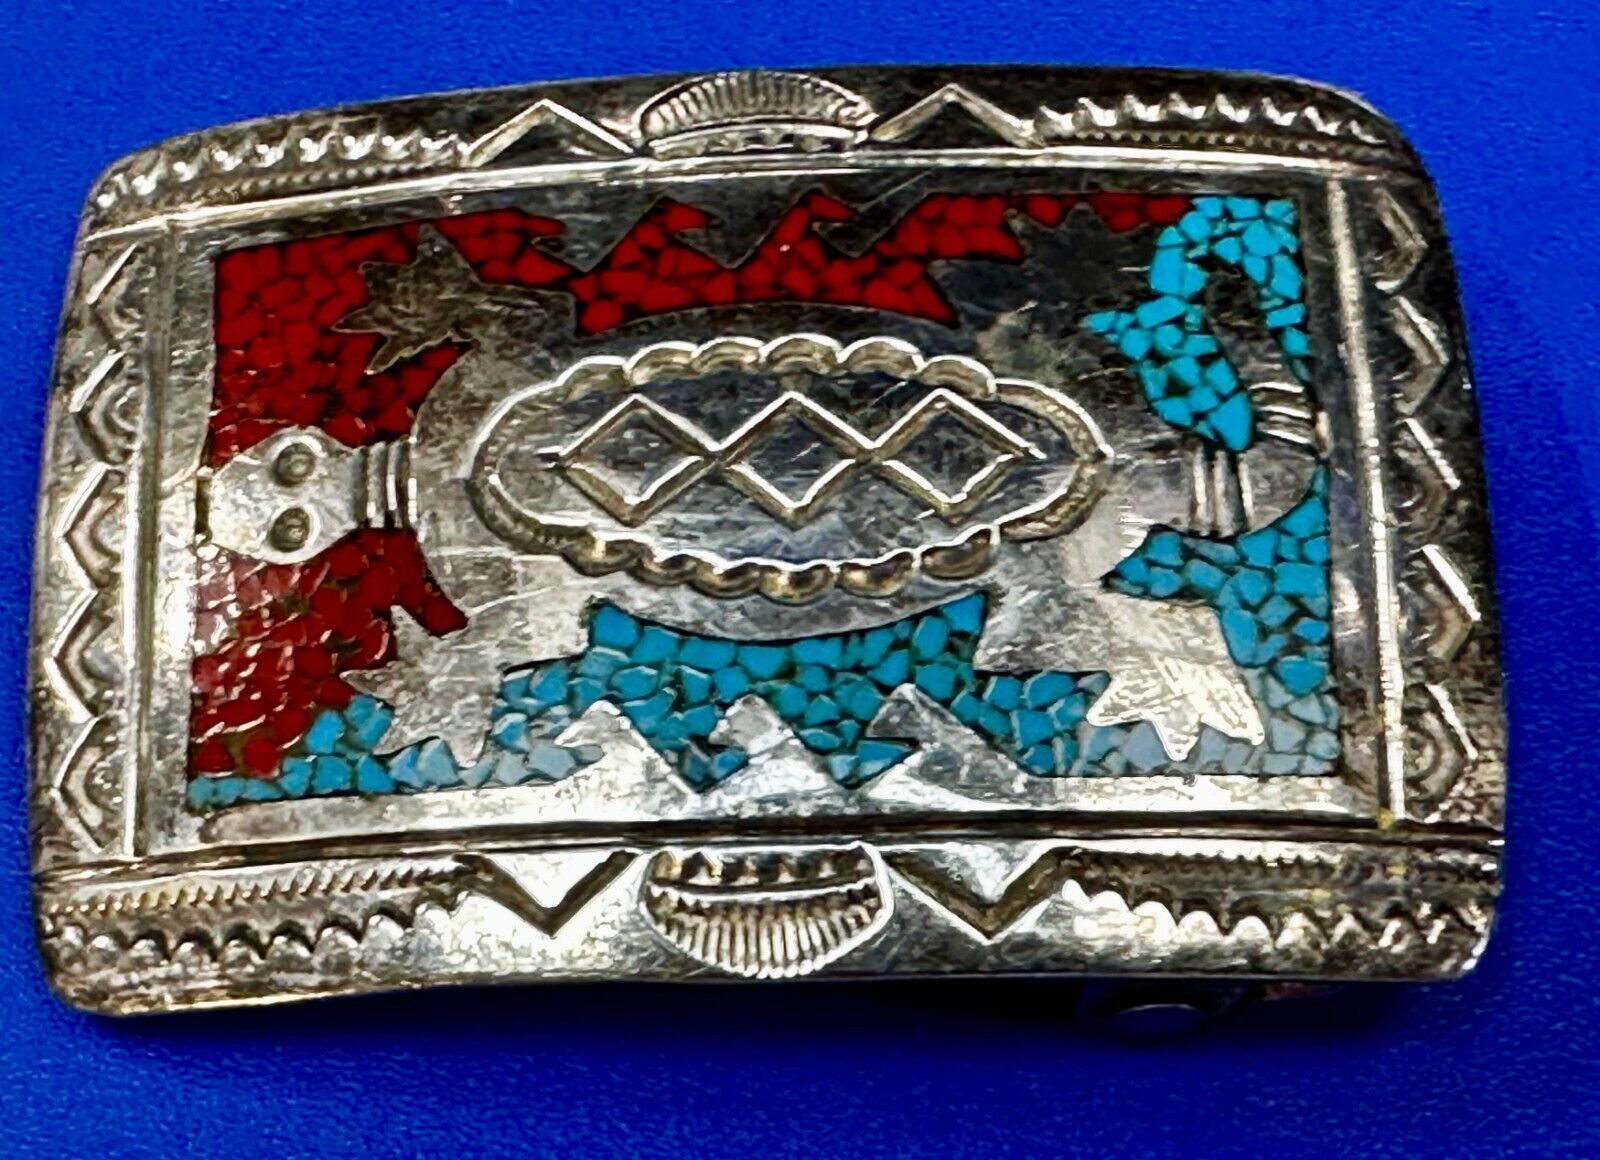 Turquoise & Coral chip Inlay Vintage Sterling Silver Navajo RU? Belt Buckle